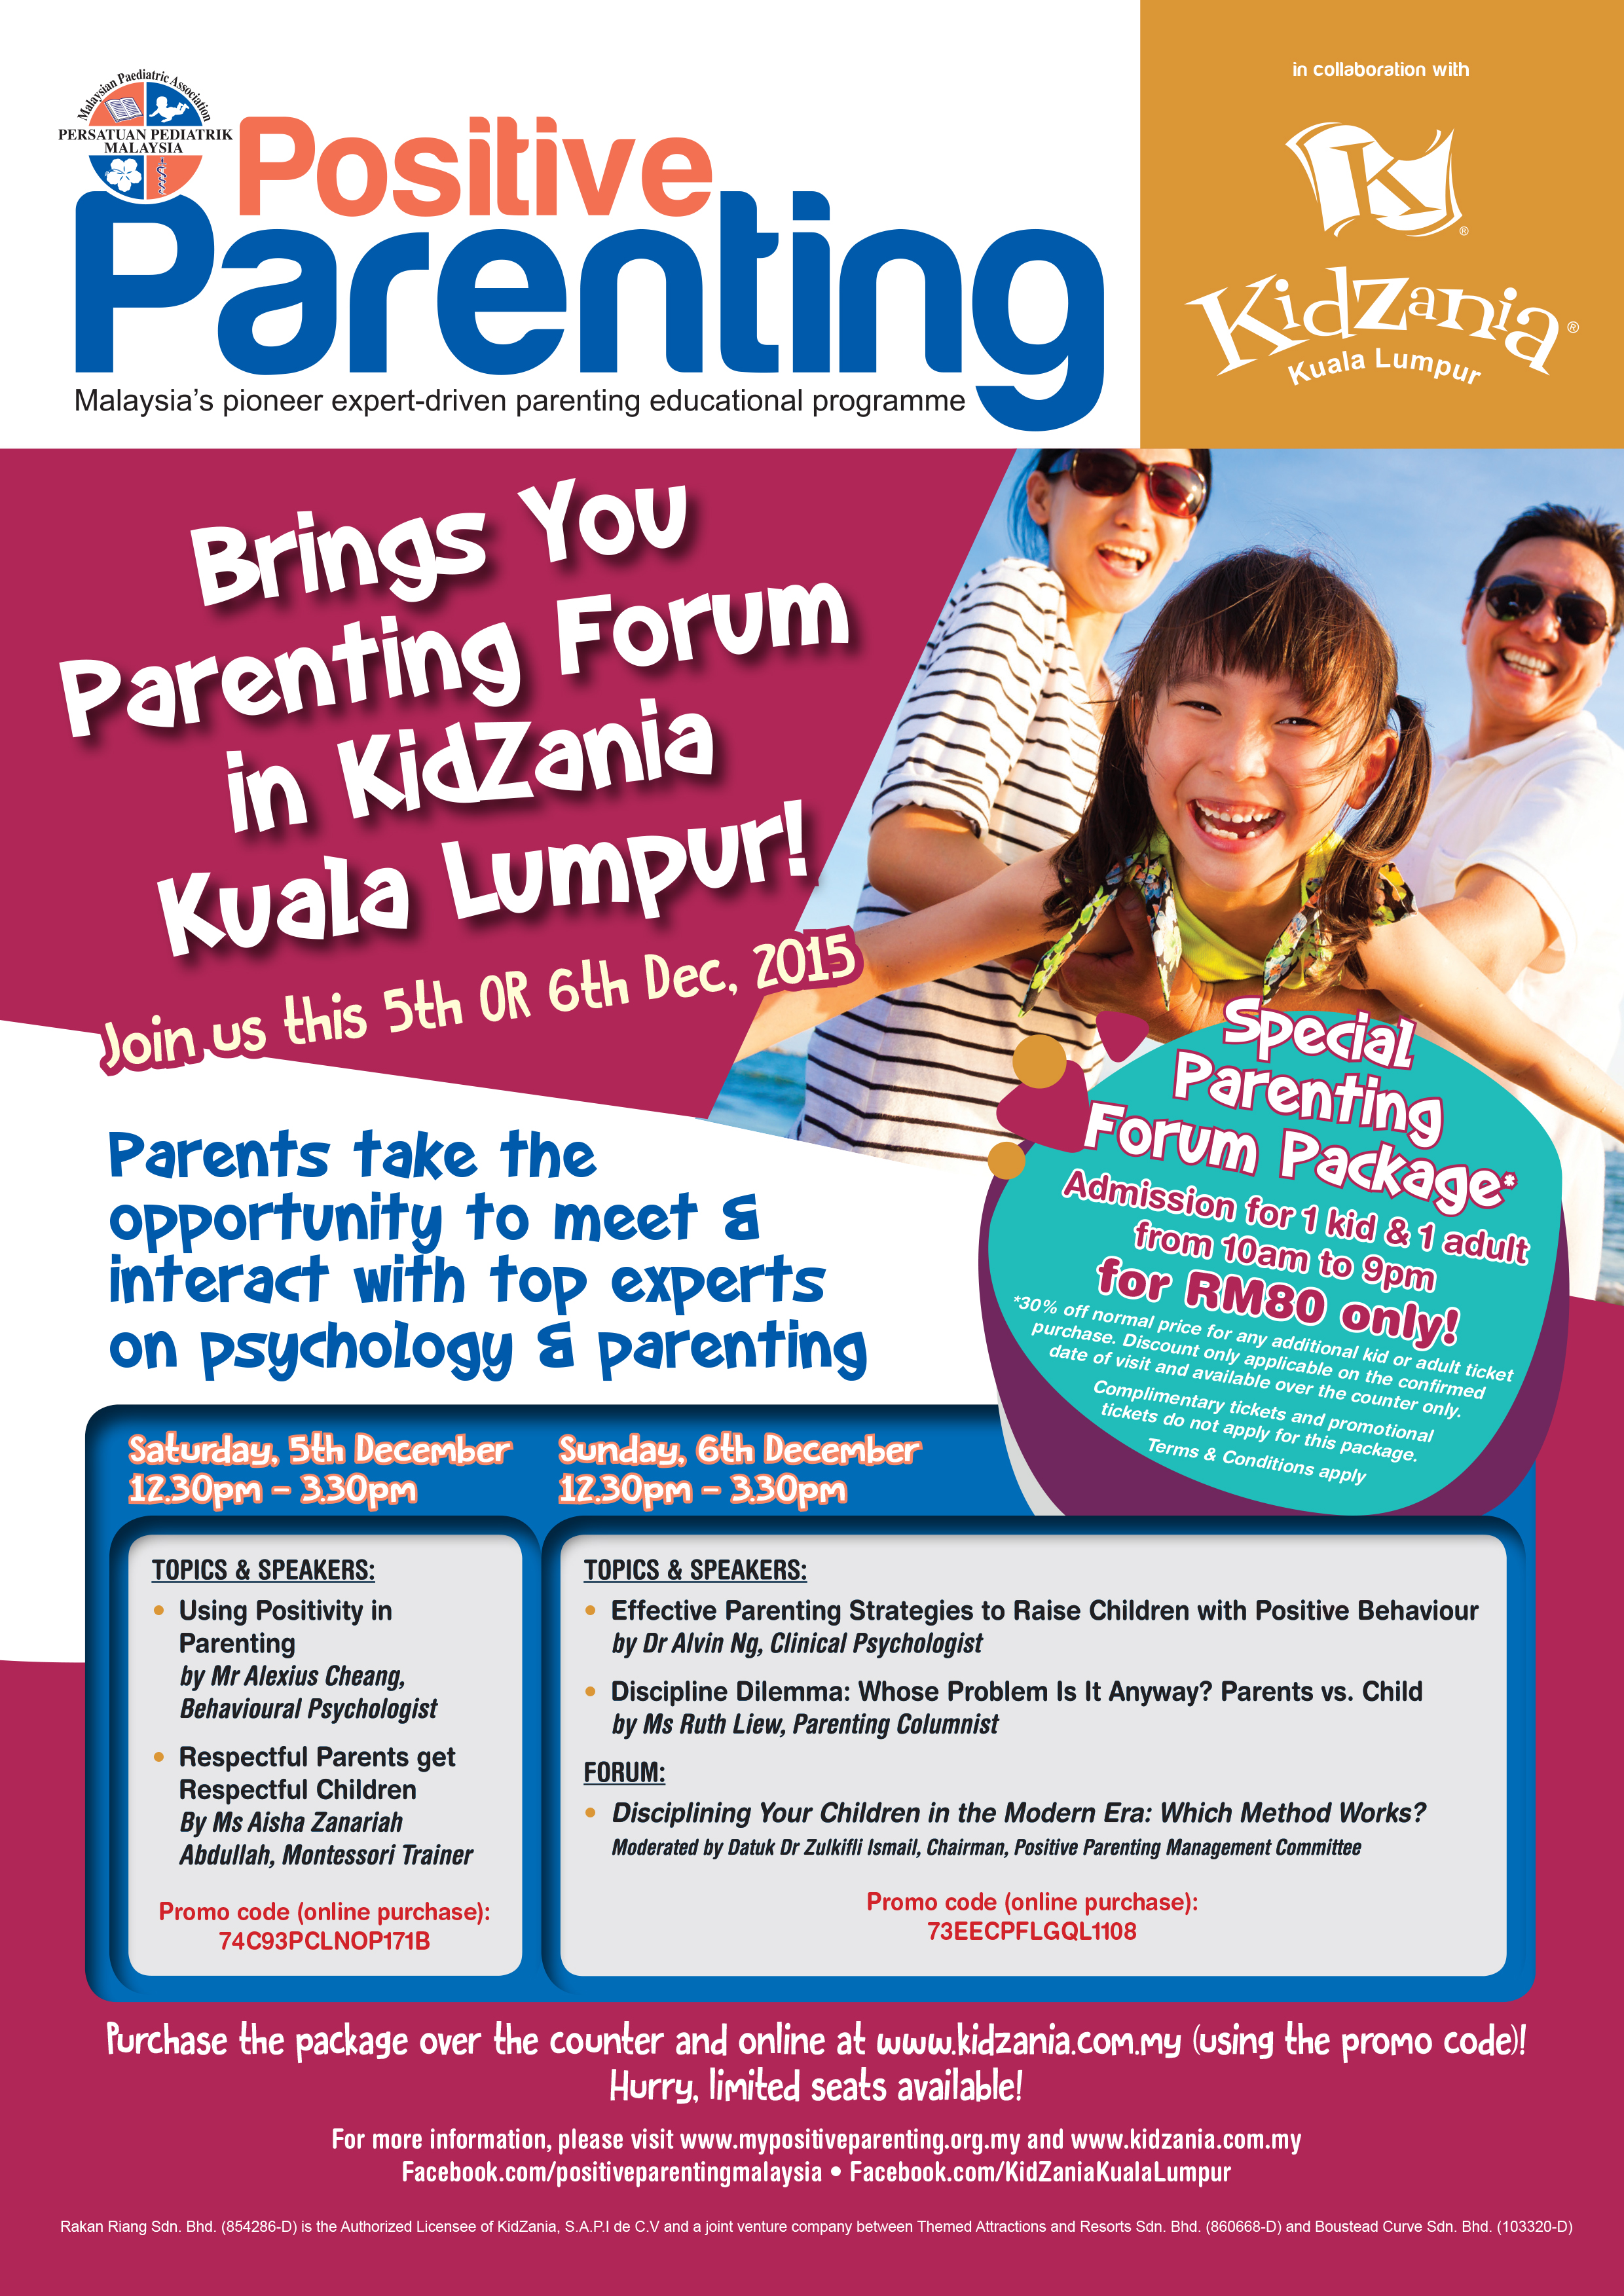 Parenting Session at KidZania - Positive Parenting